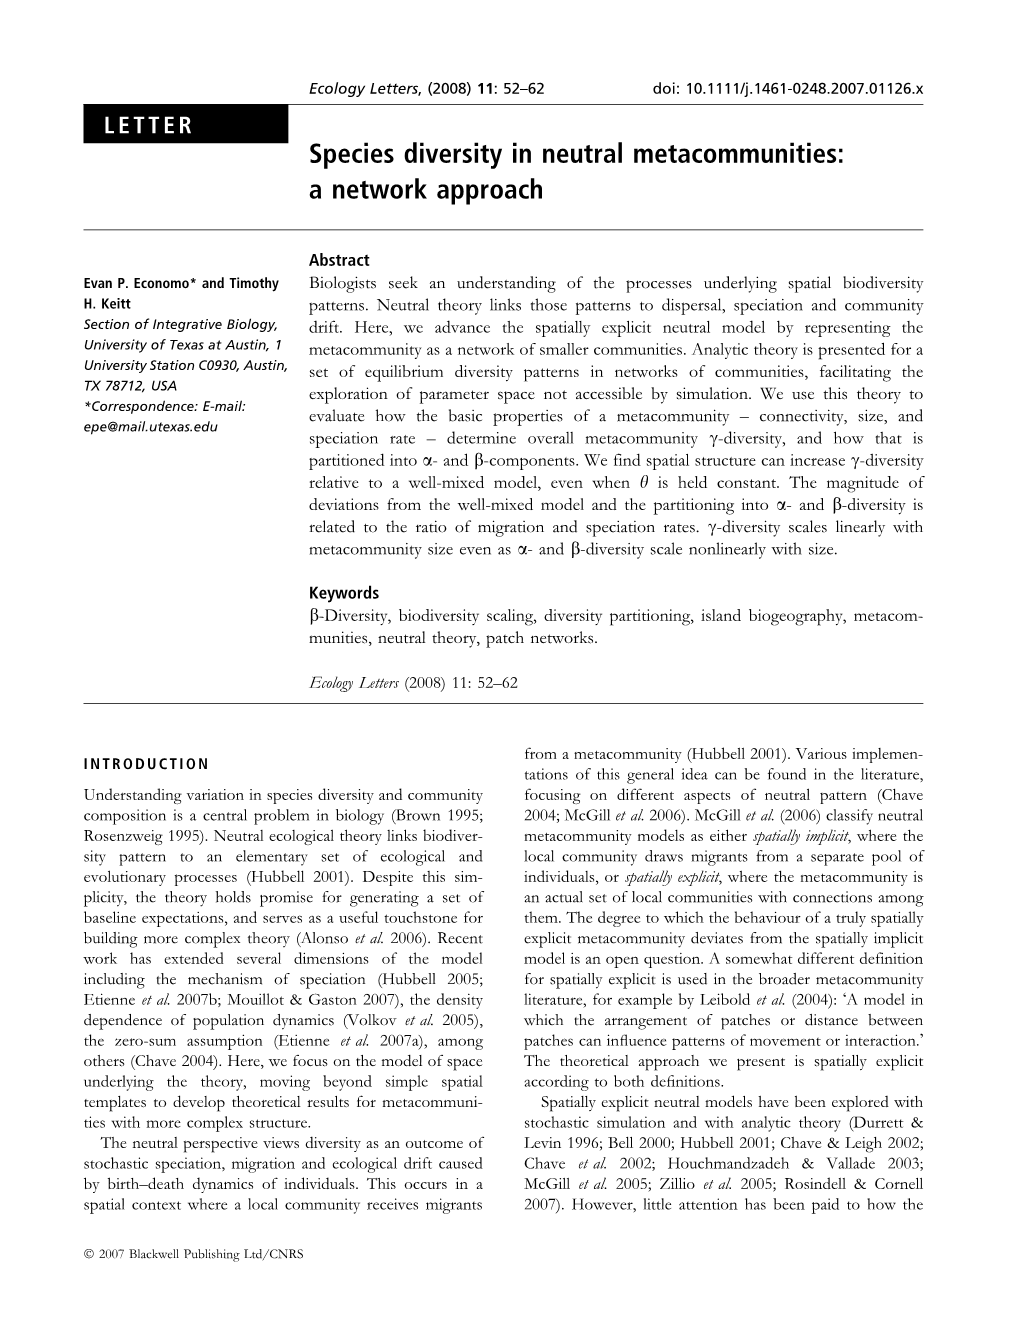 Species Diversity in Neutral Metacommunities: a Network Approach